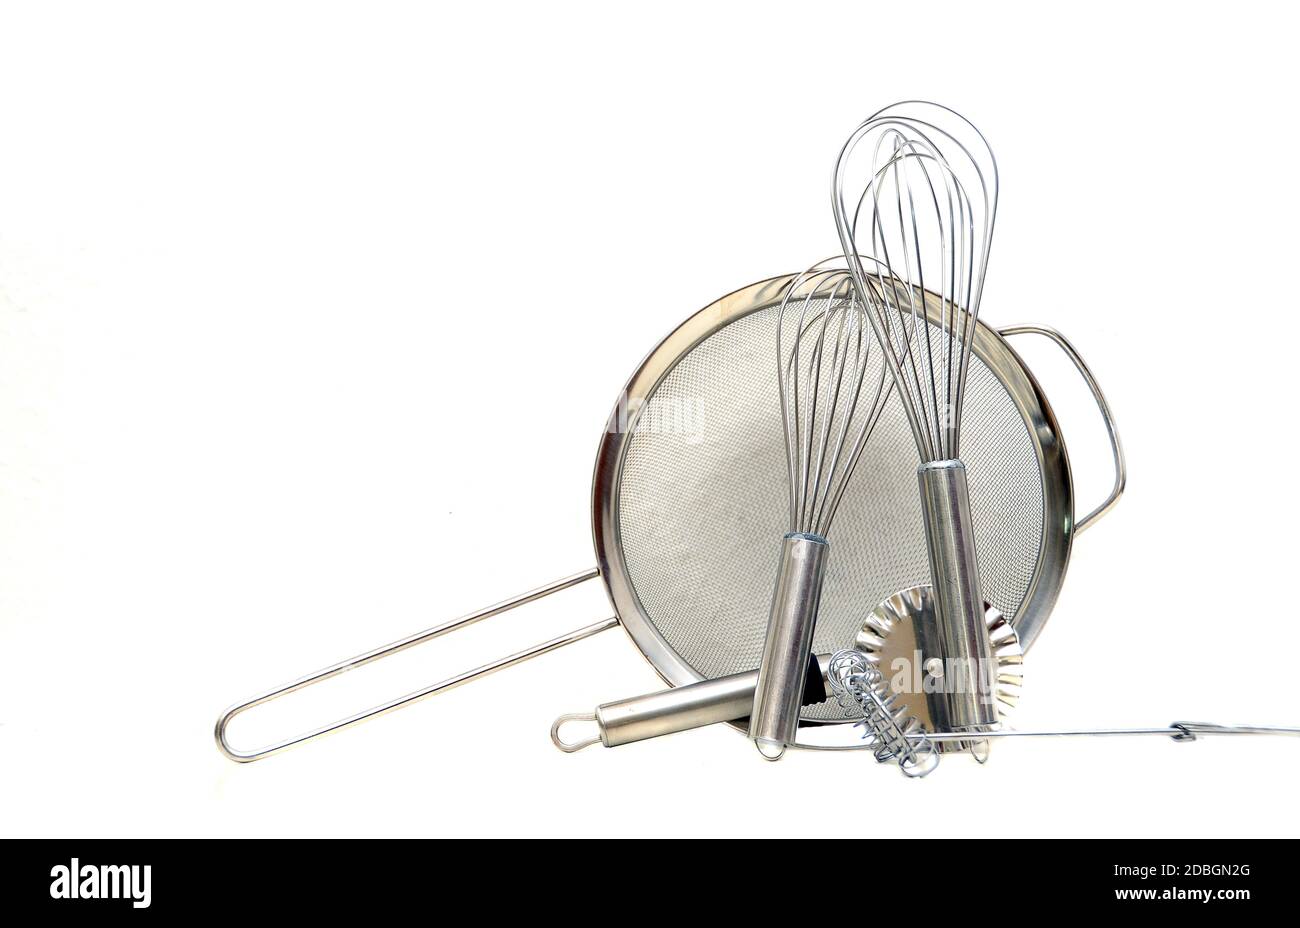 kitchen utensils Stock Photo